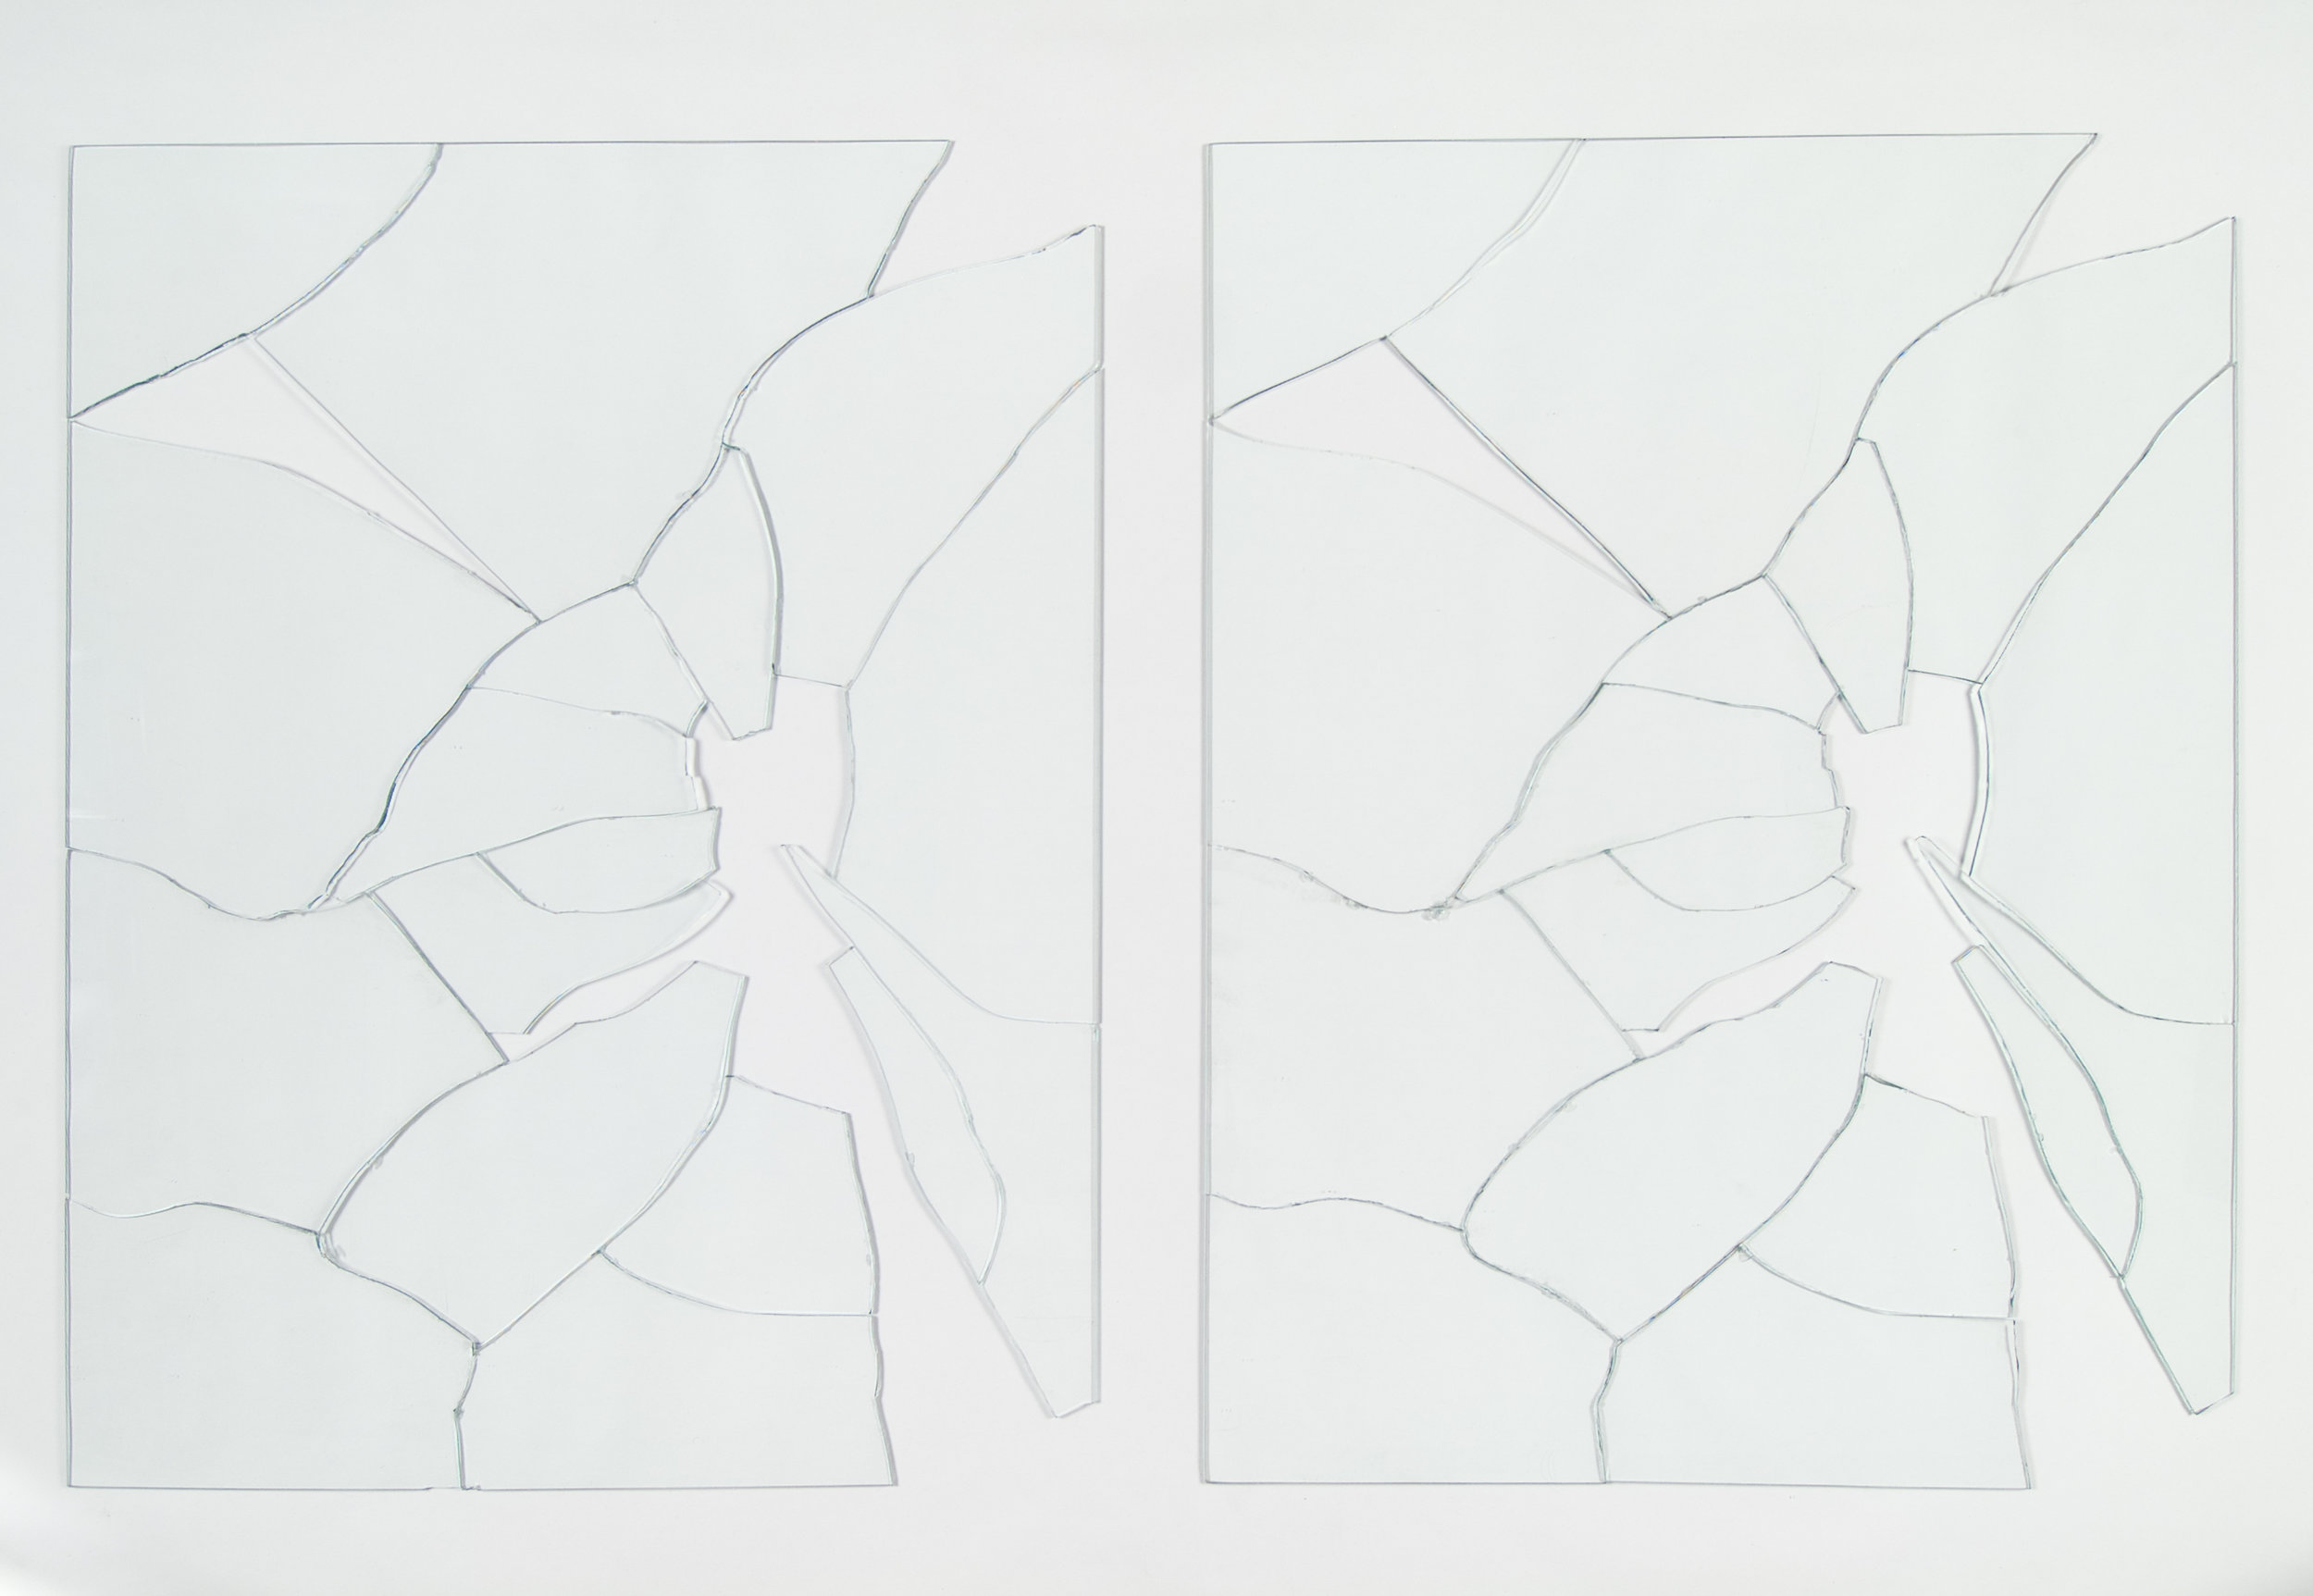  Jorge Macchi,  Vidas paralelas,  1998.   Glass [two panels], 31 ½ x 51 1/8 inches.   Colección Patricia Phelps de Cisneros 